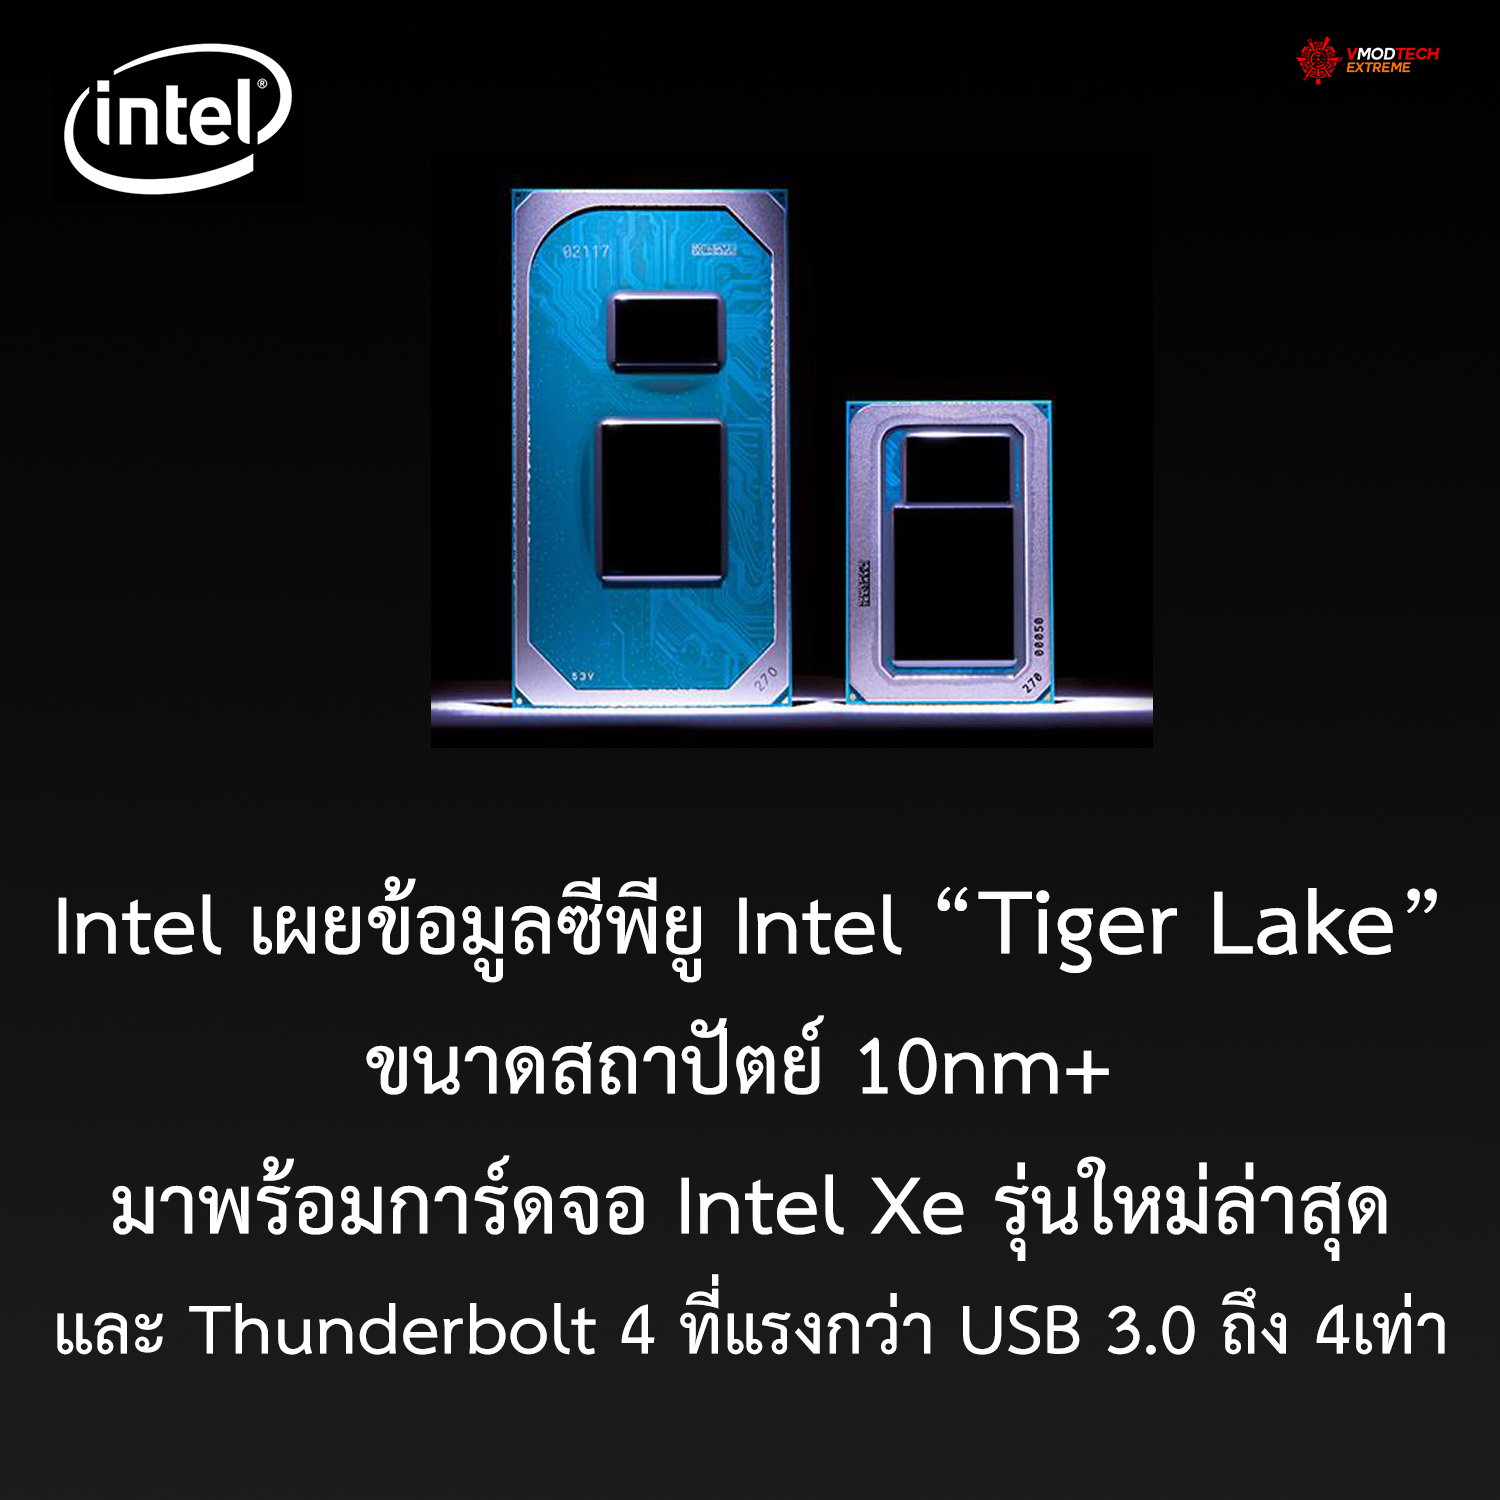 intel tiger lake Intel เผยข้อมูลซีพียู Intel Tiger Lake ขนาดสถาปัตย์ 10nm+ มาพร้อมการ์ดจอ Intel Xe รุ่นใหม่ล่าสุดและ Thunderbolt 4 